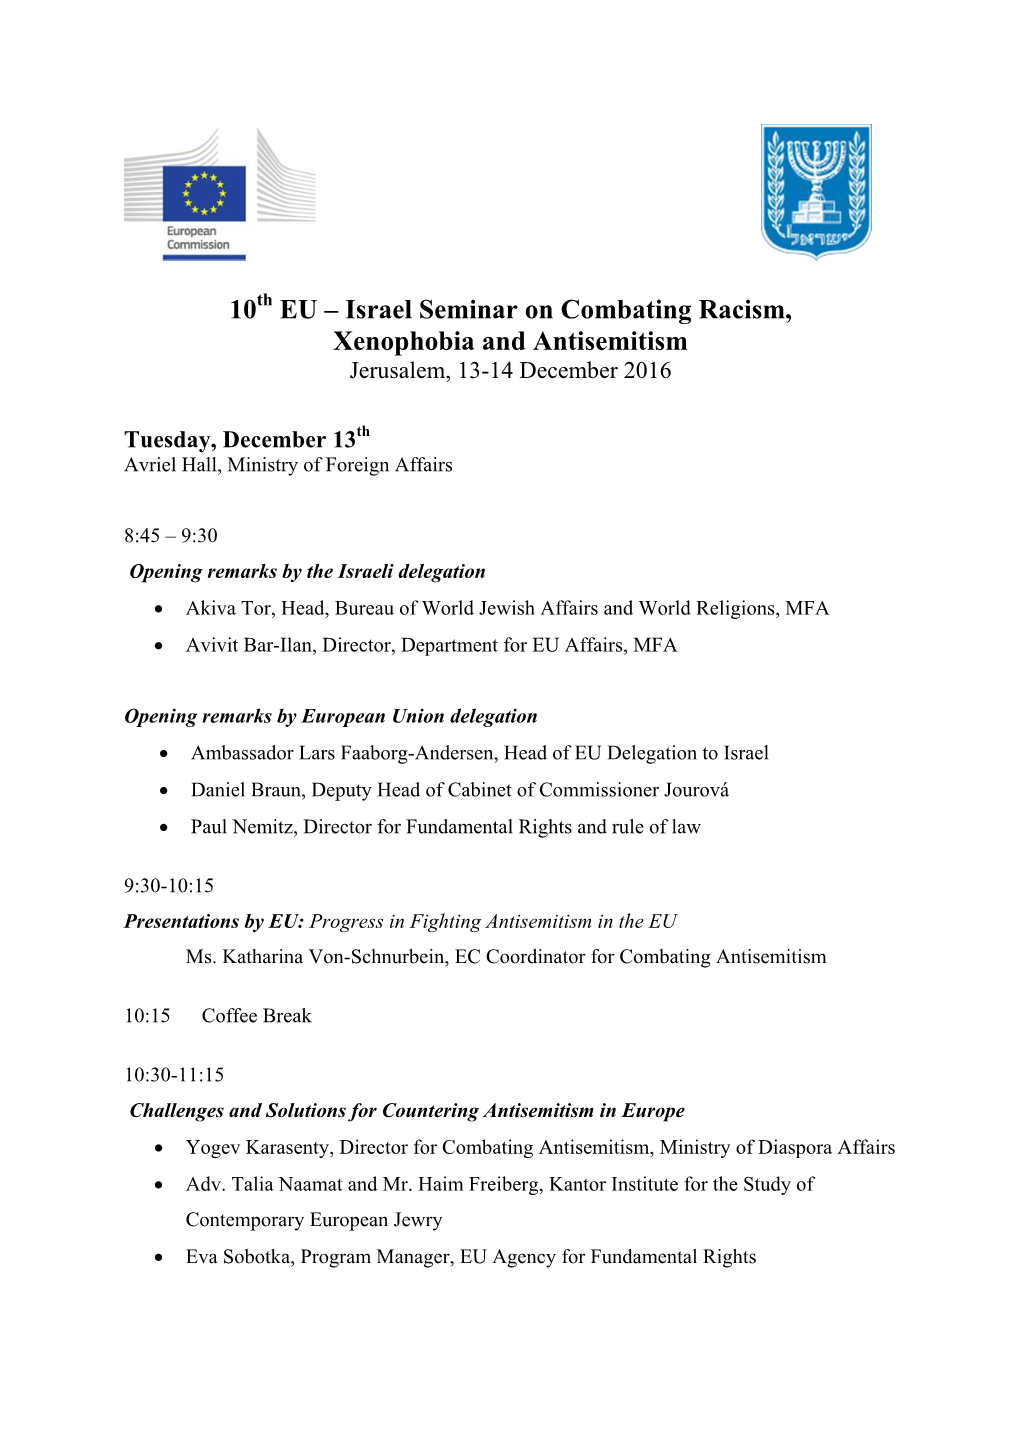 Israel Seminar on Combating Racism, Xenophobia and Antisemitism Jerusalem, 13-14 December 2016